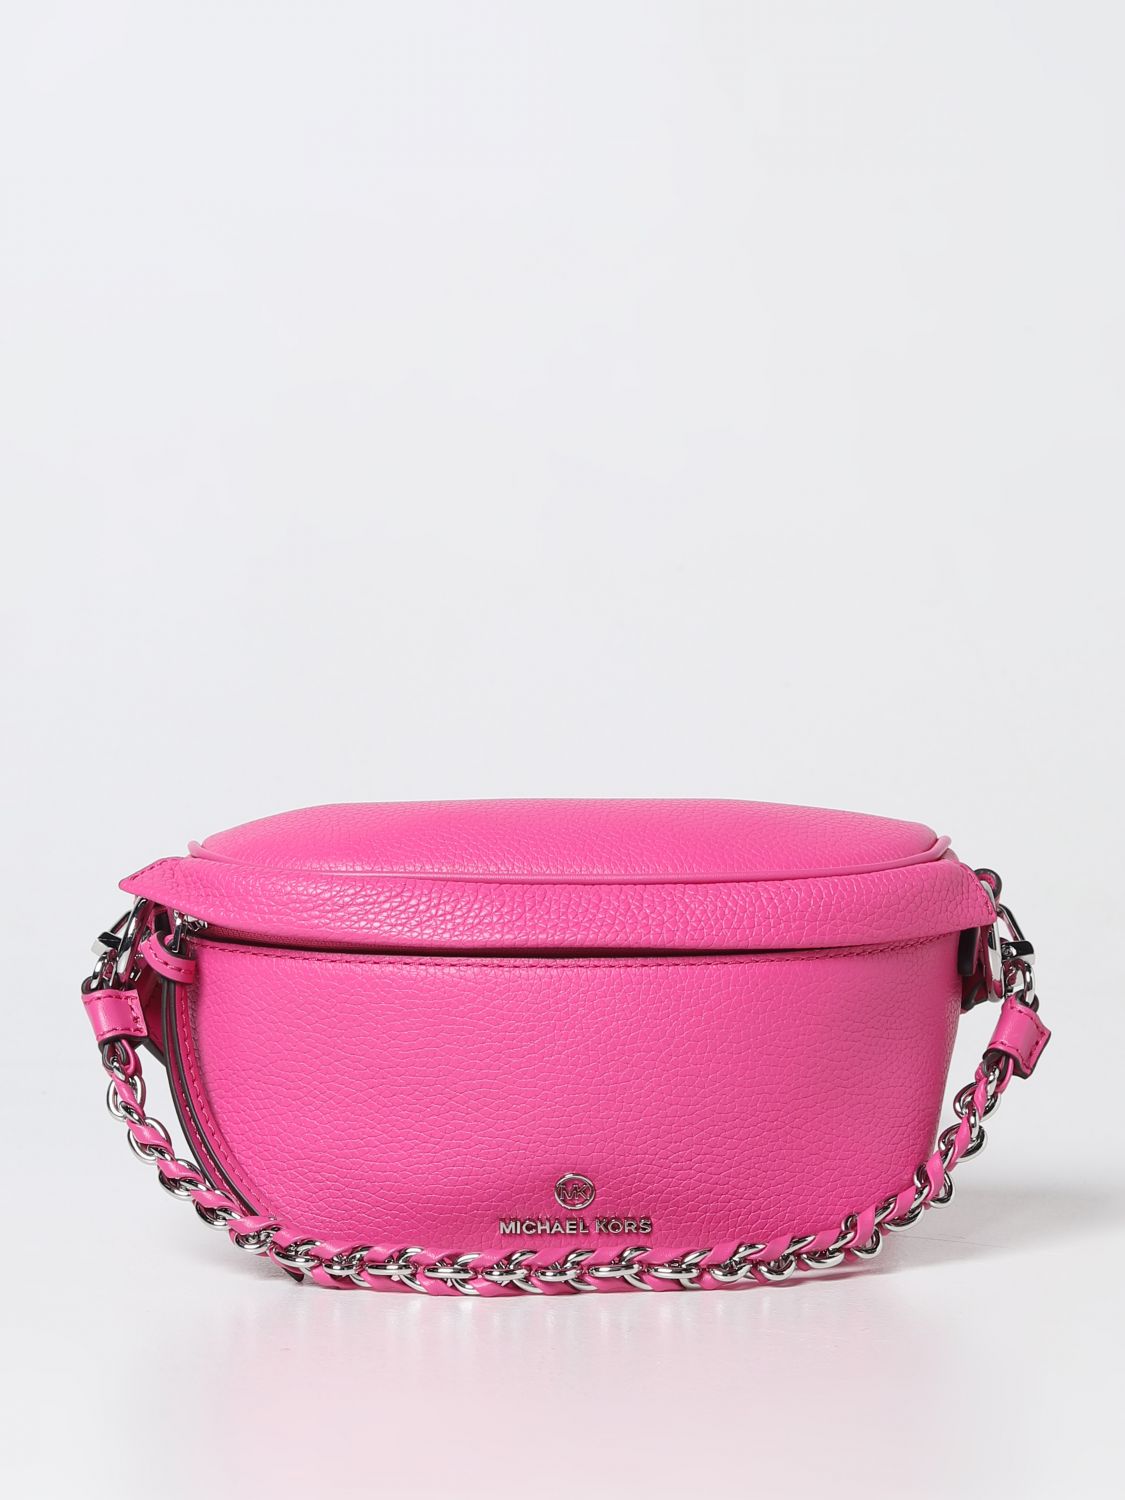 MICHAEL KORS: belt bag for woman - Cherry | Michael Kors belt bag  30S2S04M1L online on 